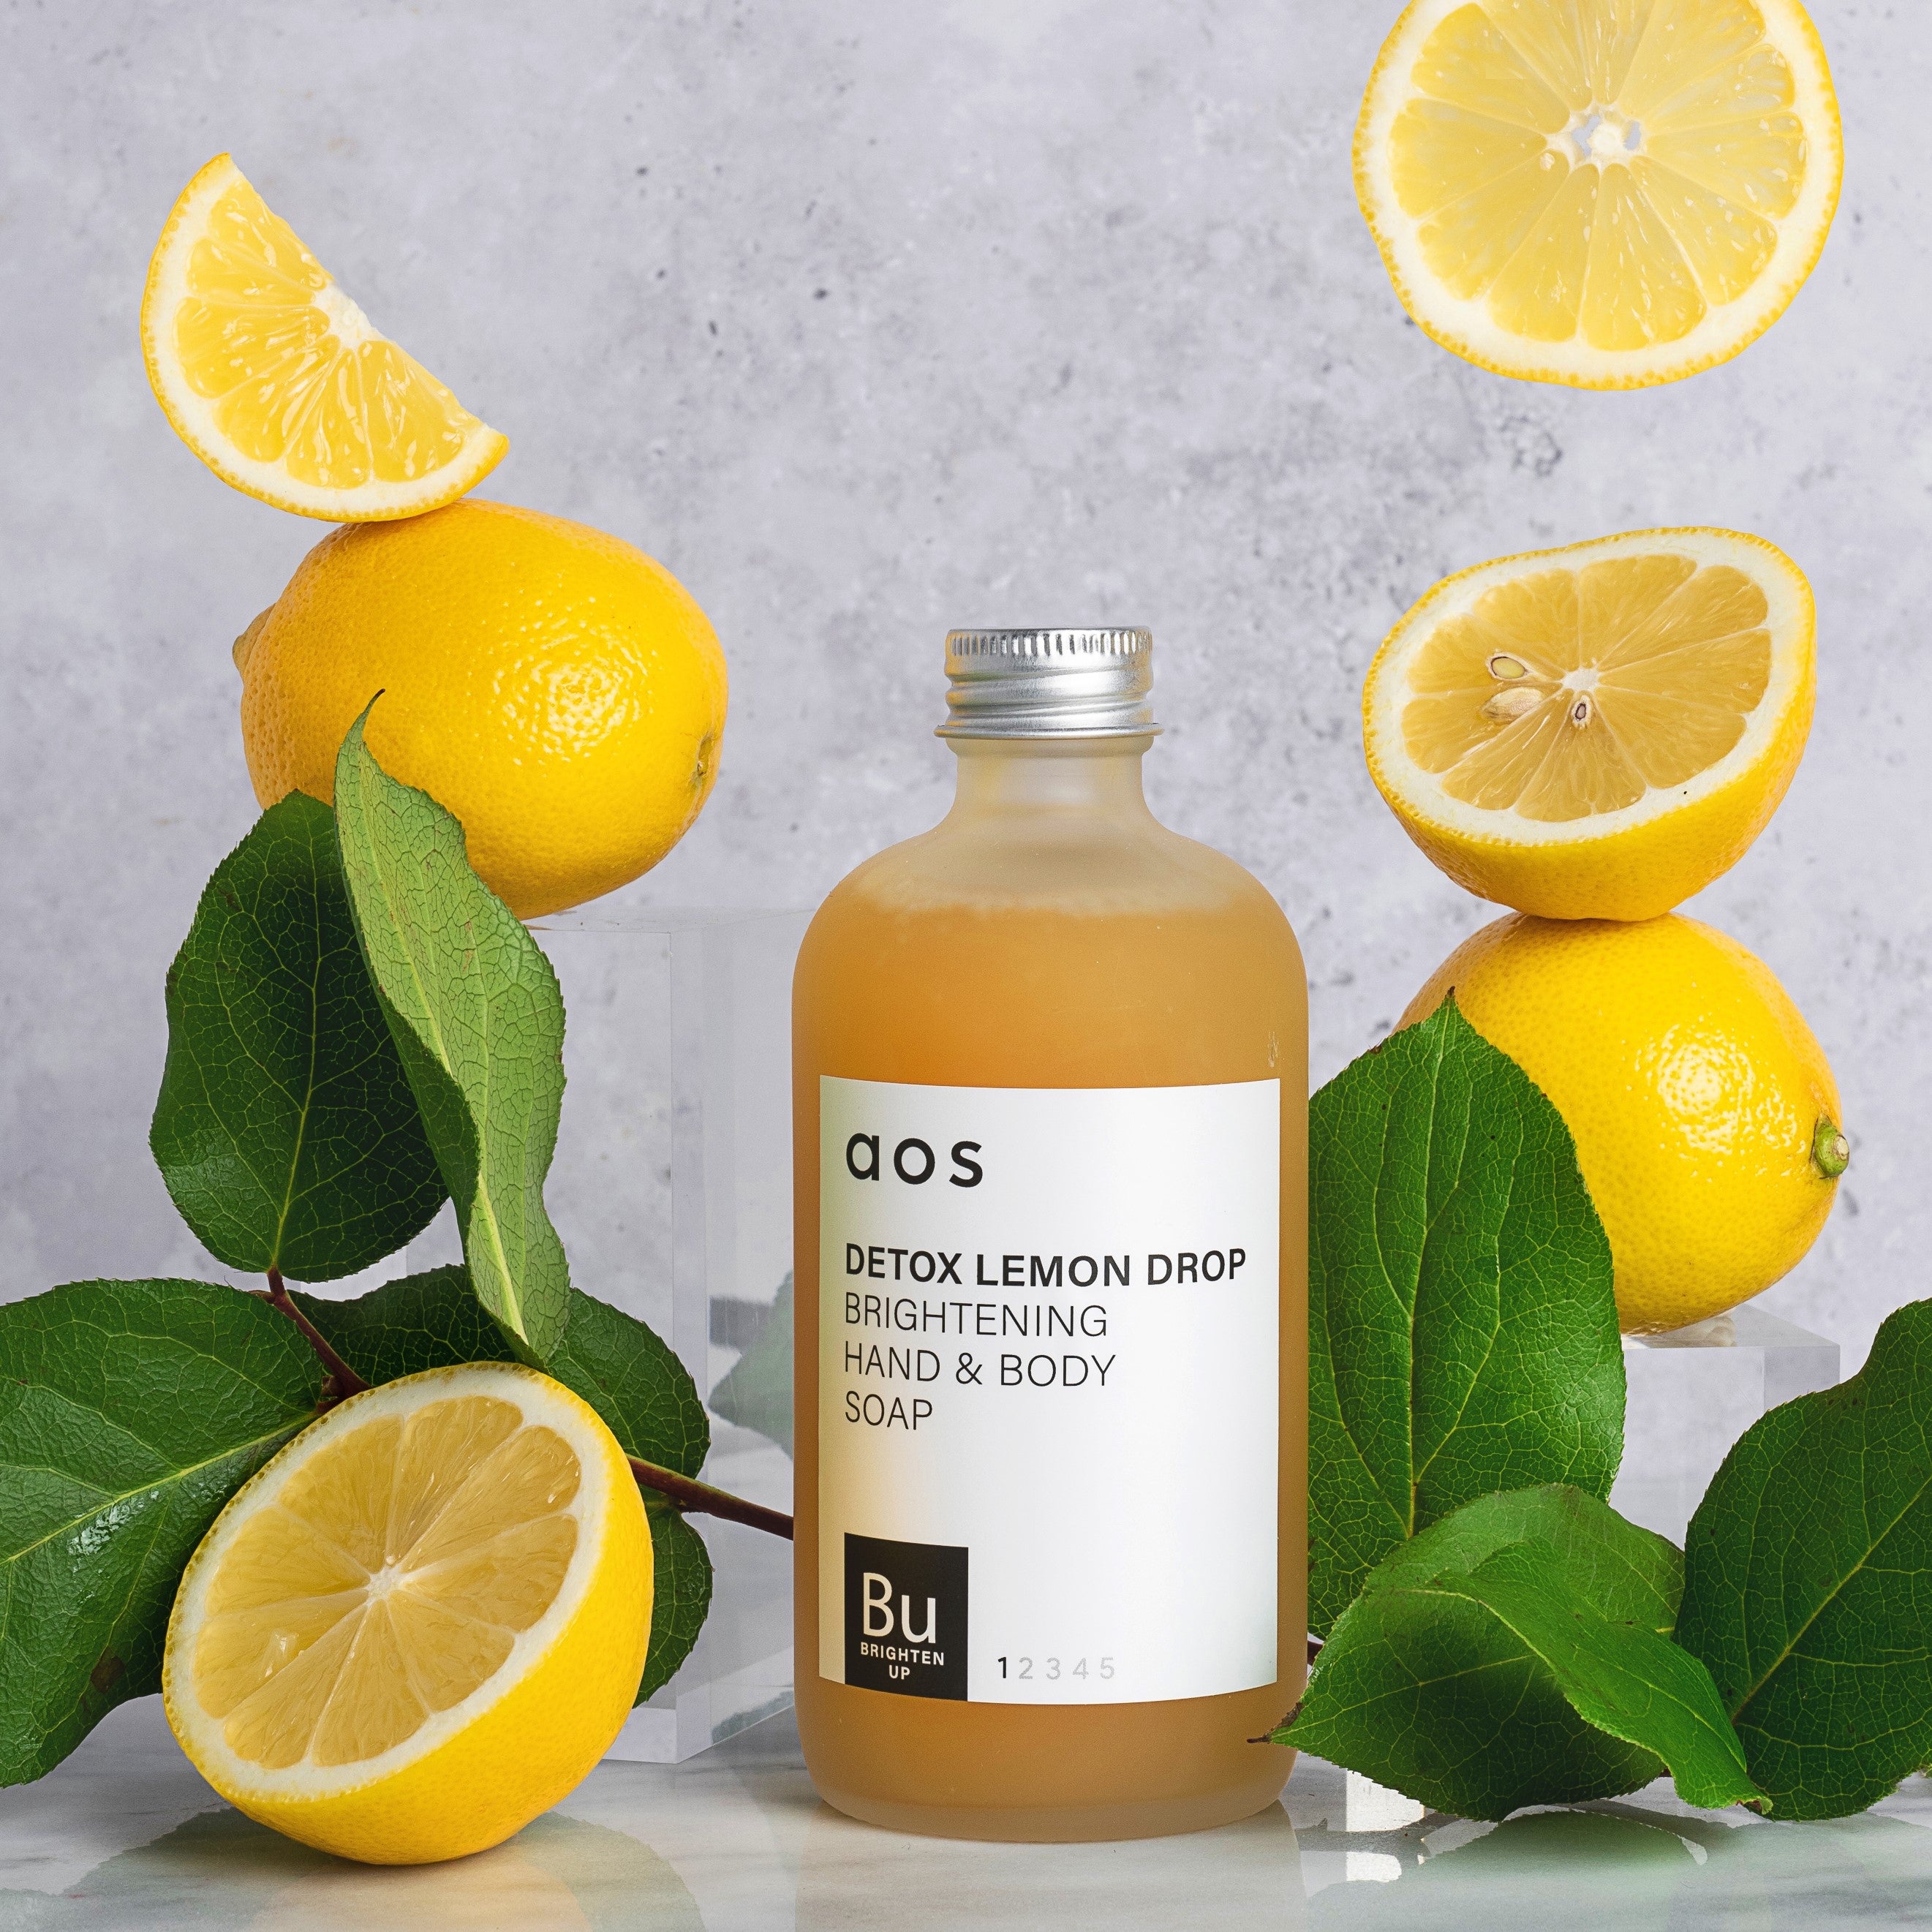 Detox Lemon Drop Brightening Hand & Body Soap